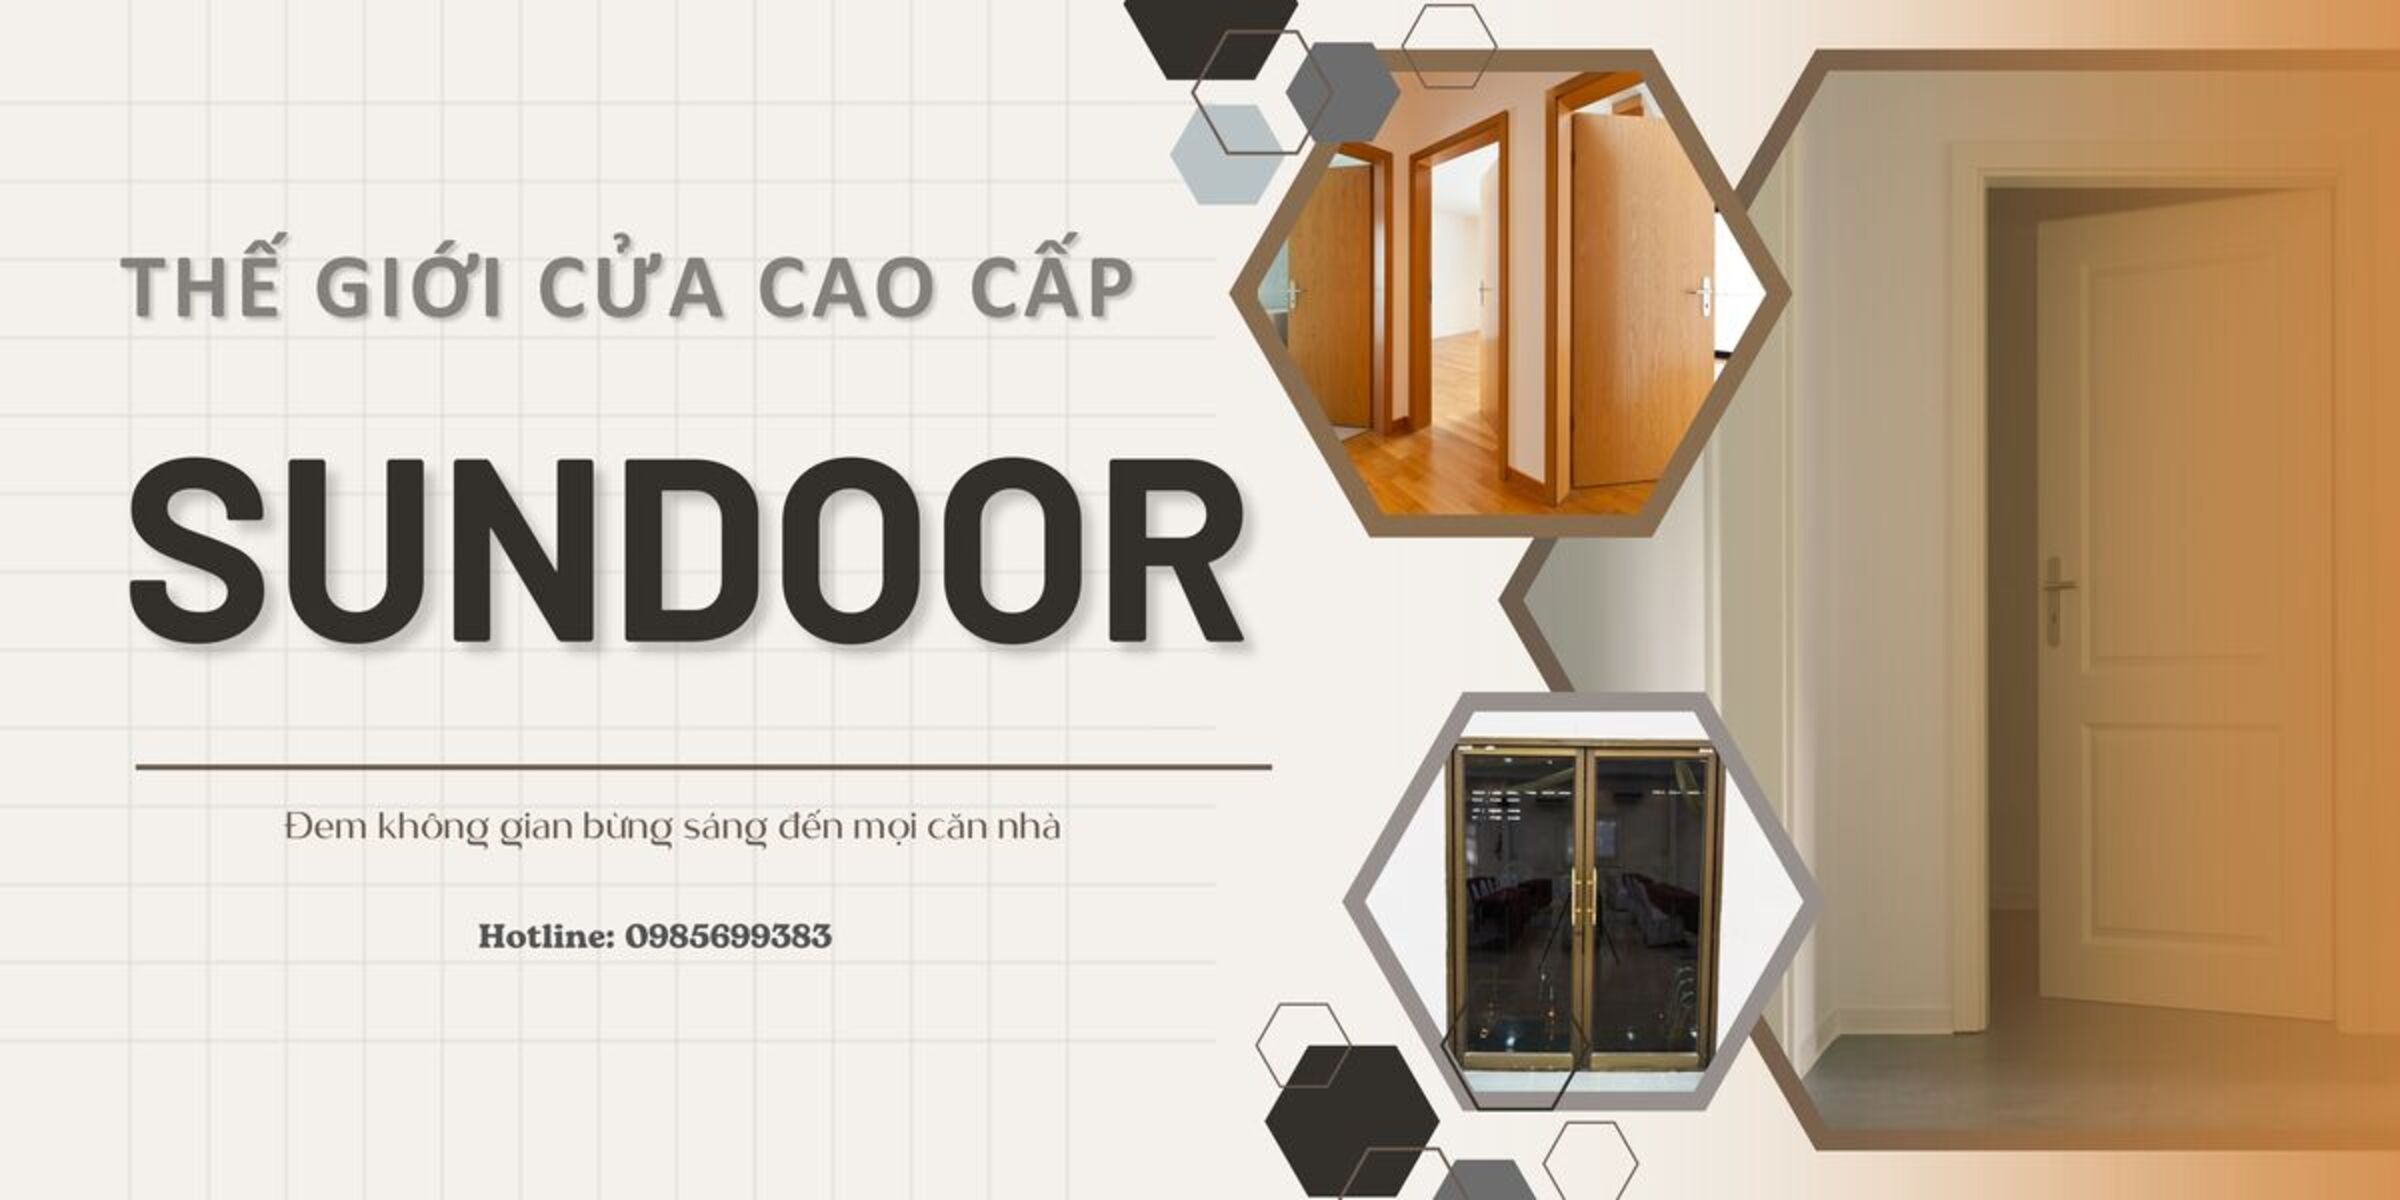 Đặt mua cửa nhôm Xingfa tại website Sundoor.vn